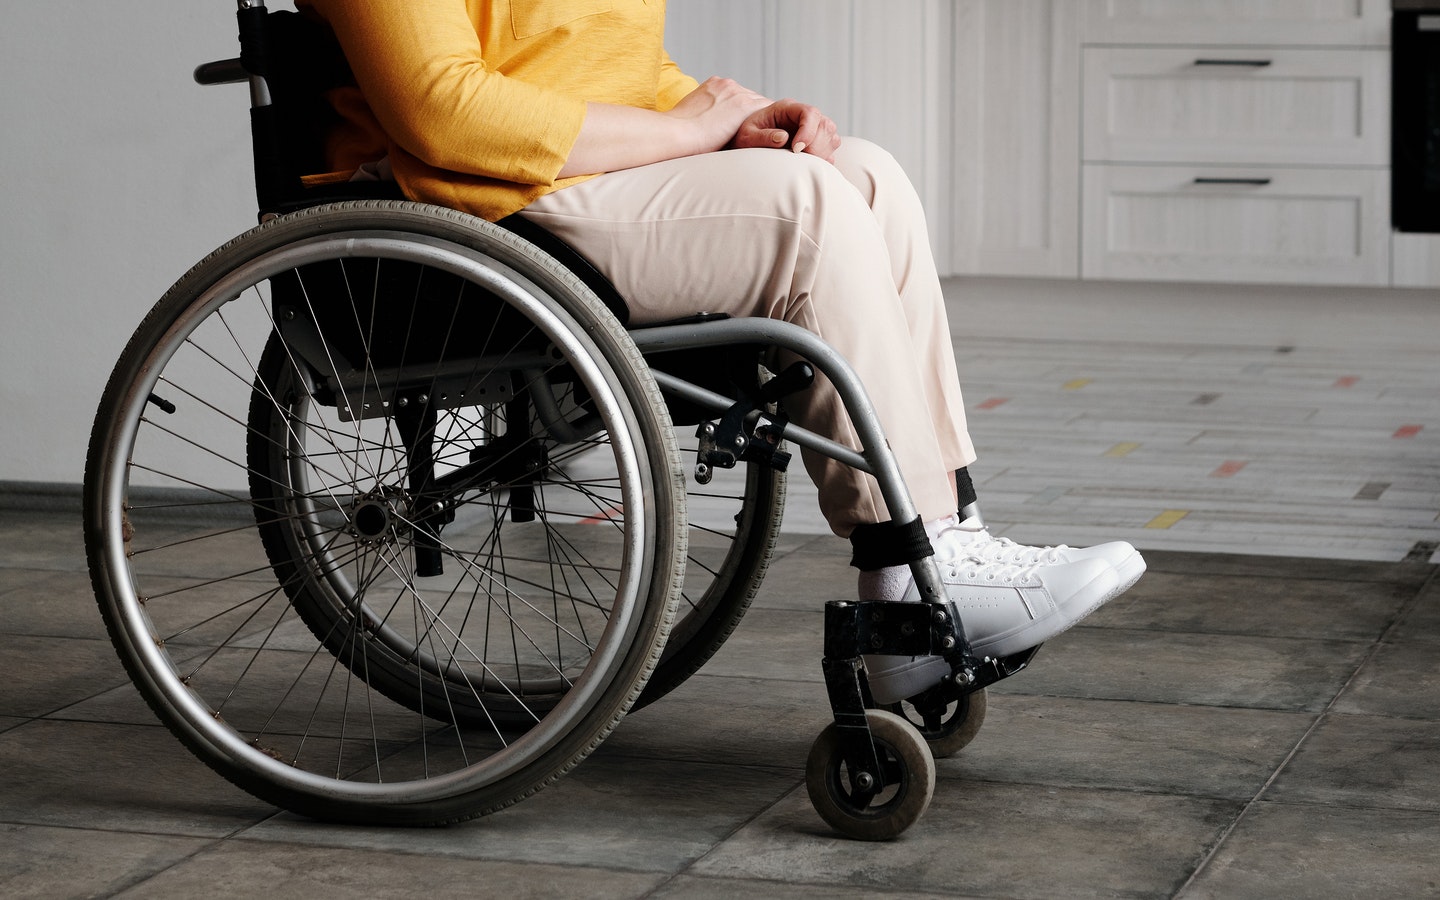 a person on a wheelchair